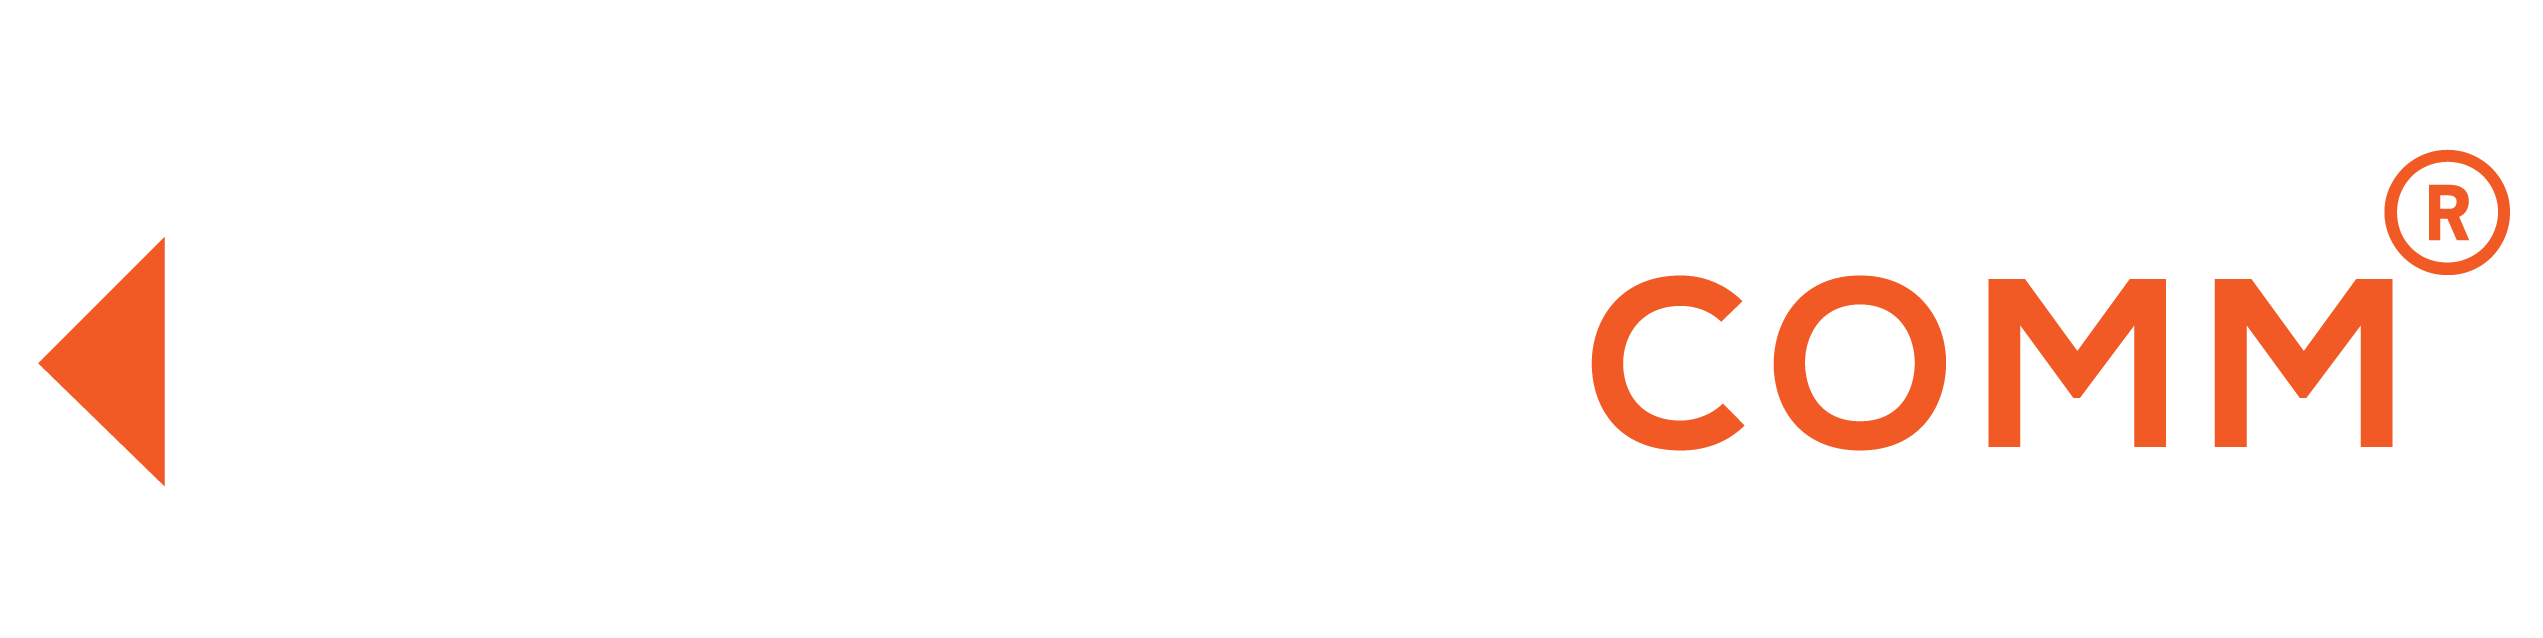 Designcomm Technologies Pvt Ltd logo